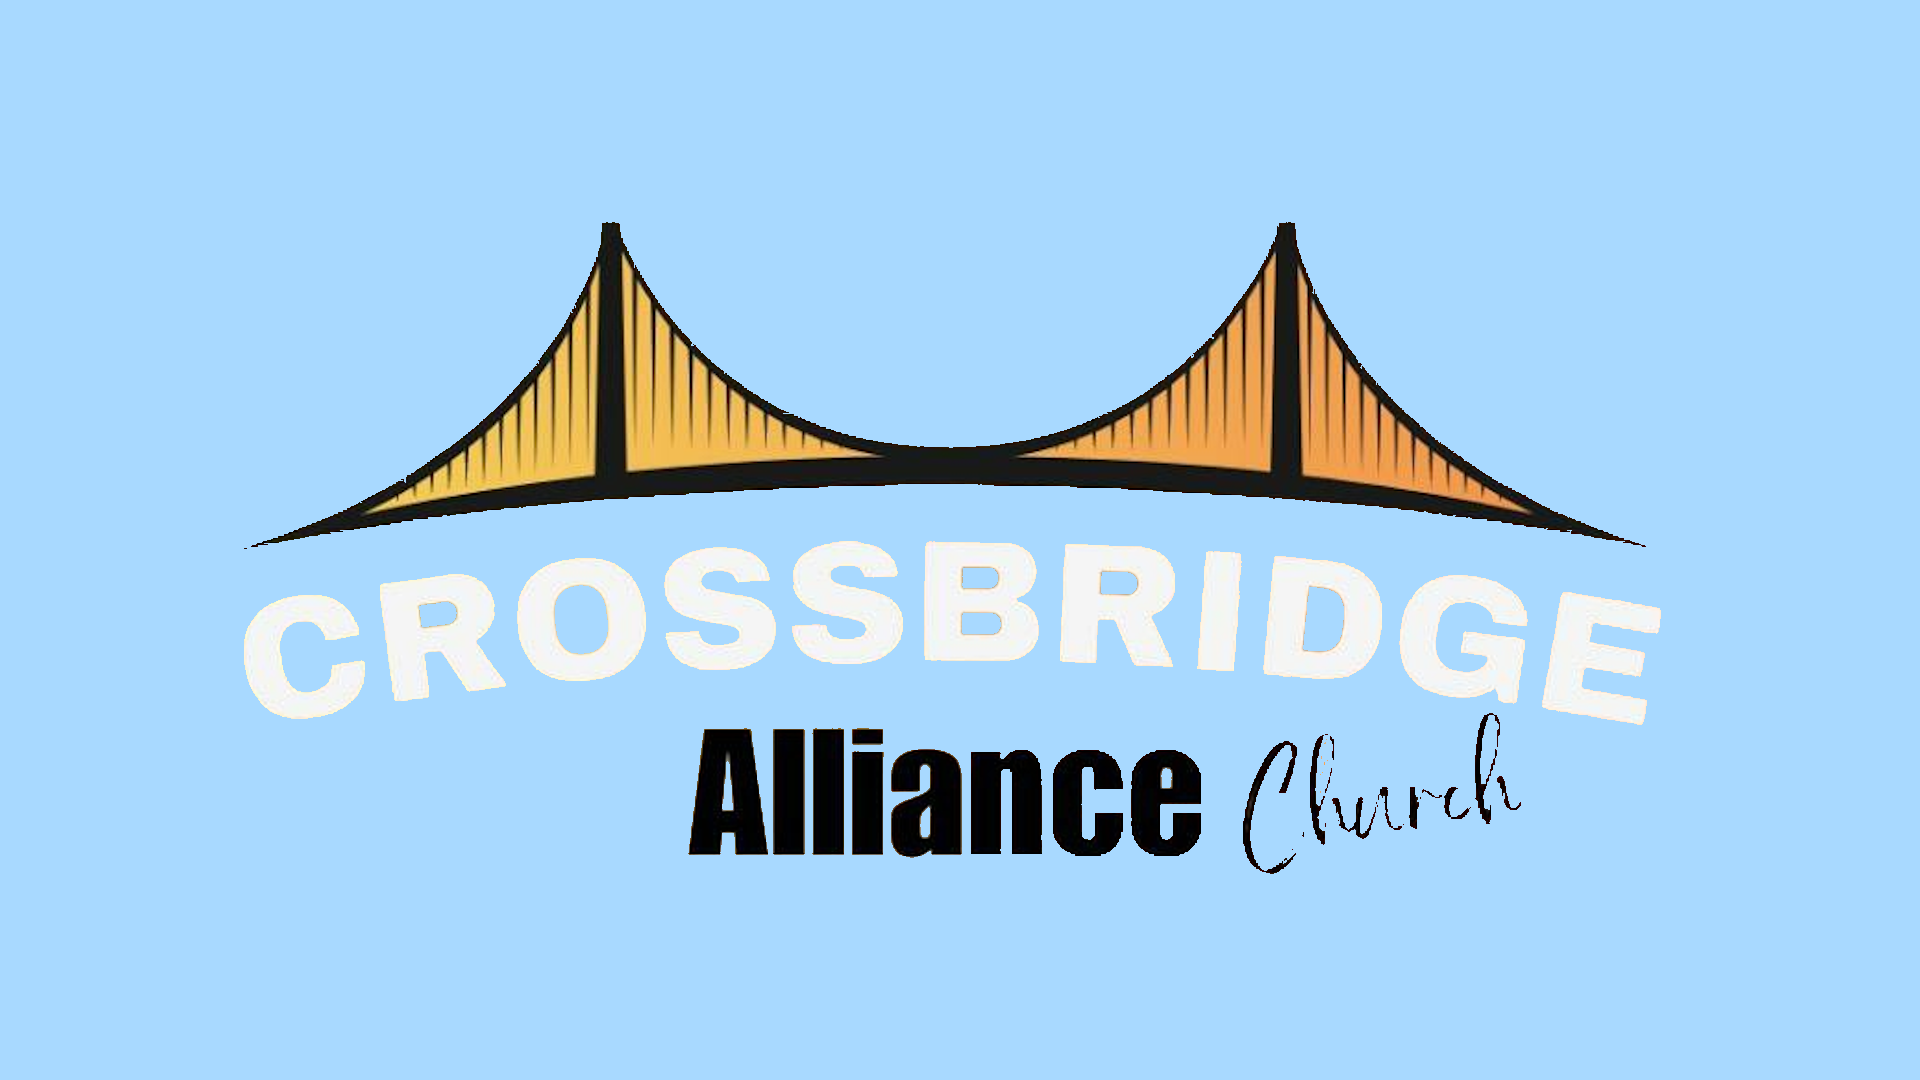 CrossBridge Alliance Church